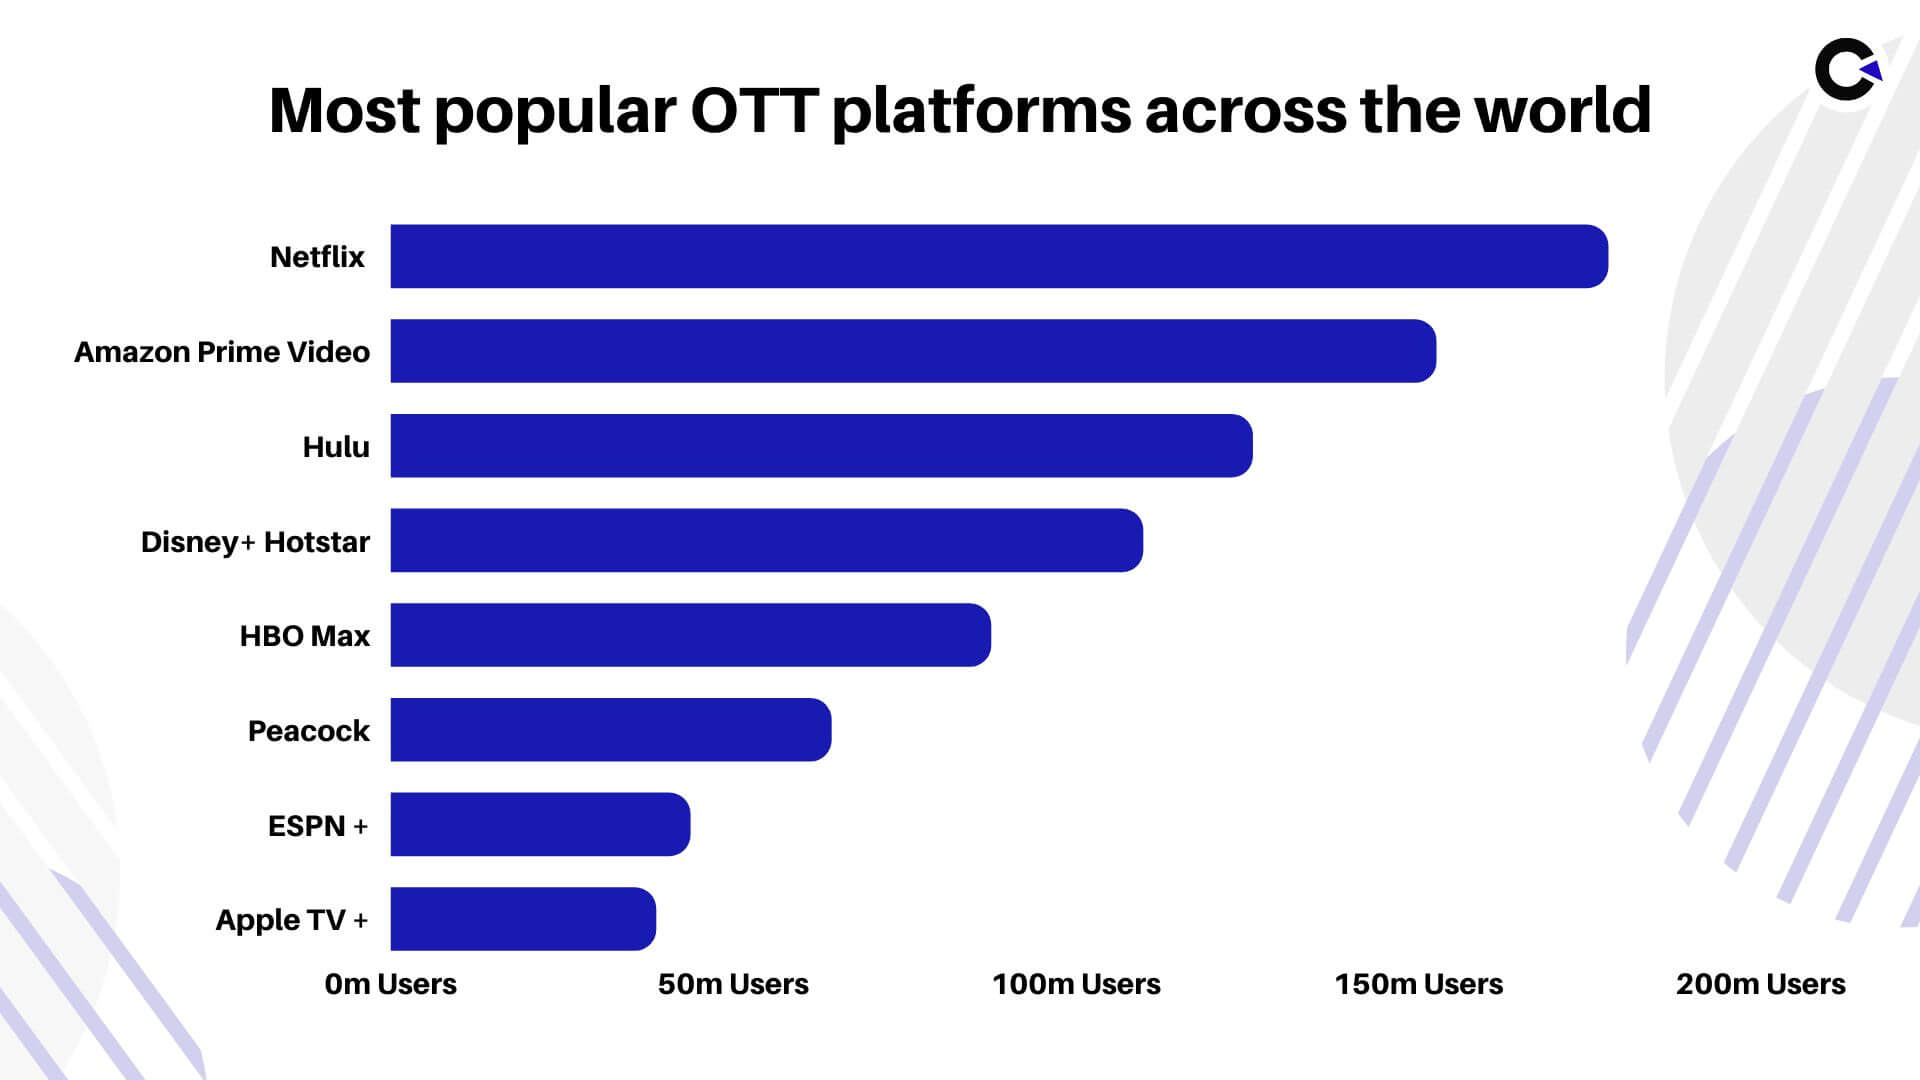 Most popular OTT platform across the world